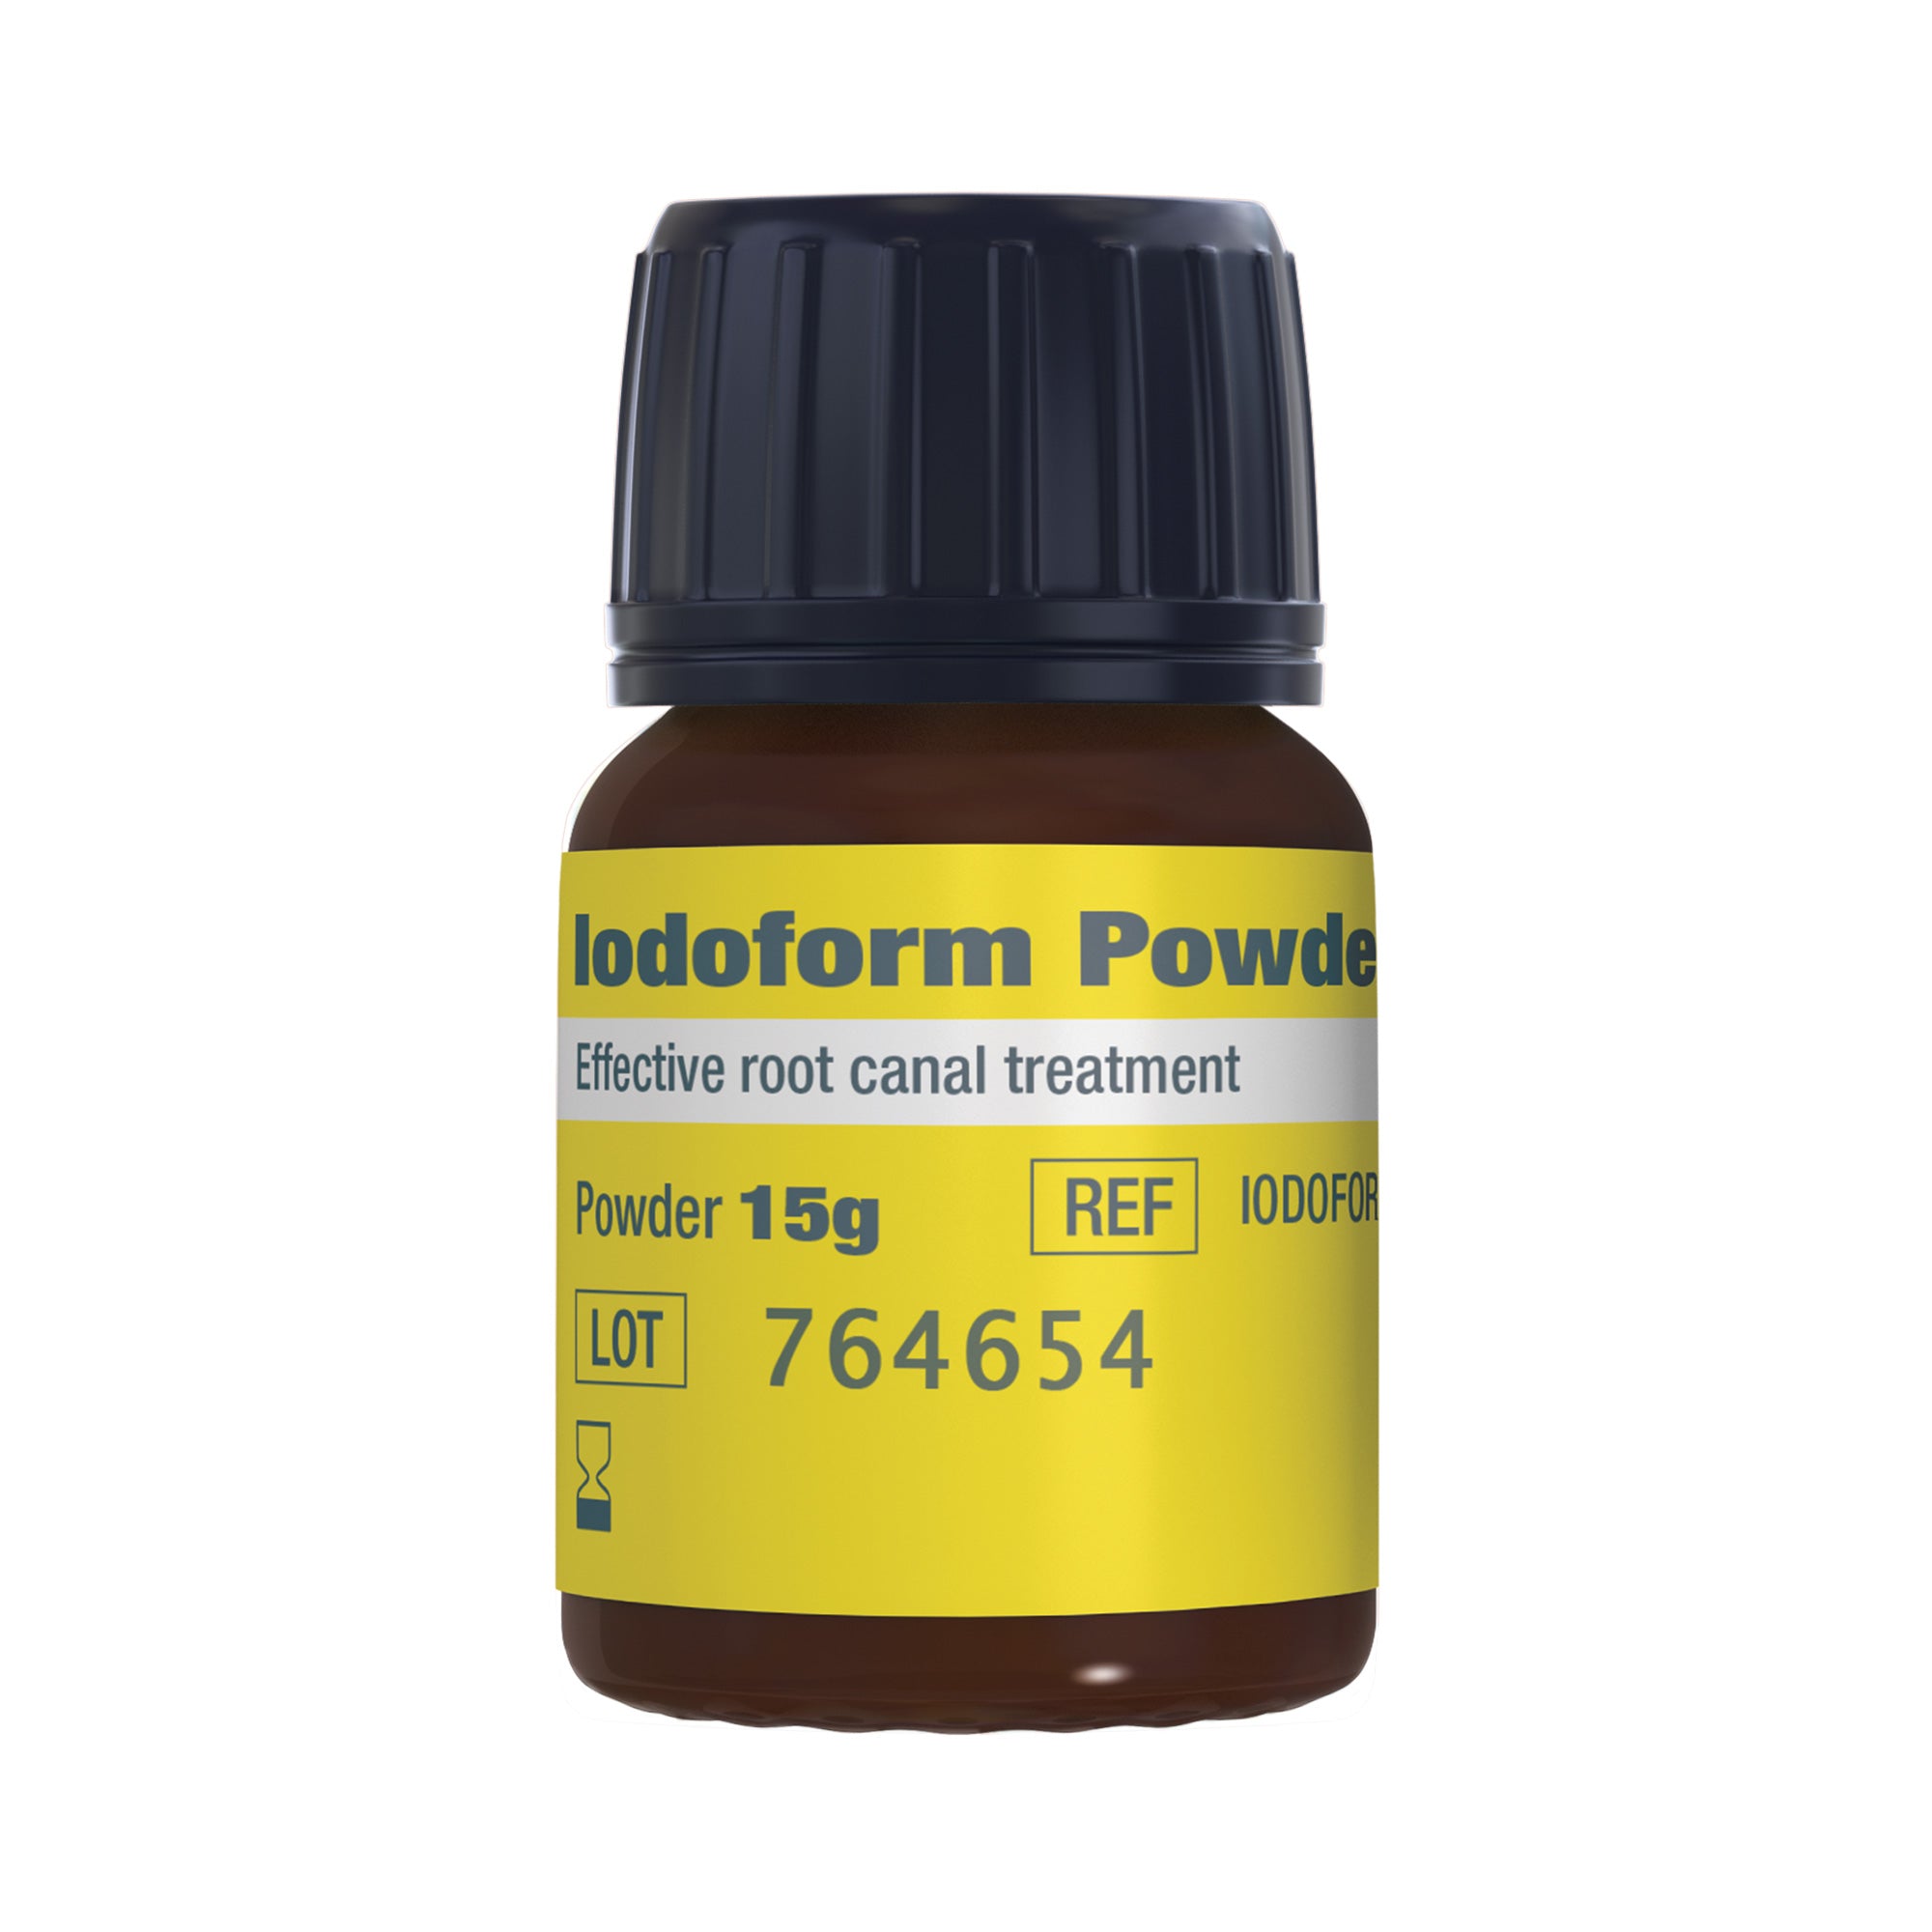 DSI Iodoform Powder For Root Canal Treatment 15g 0.5oz